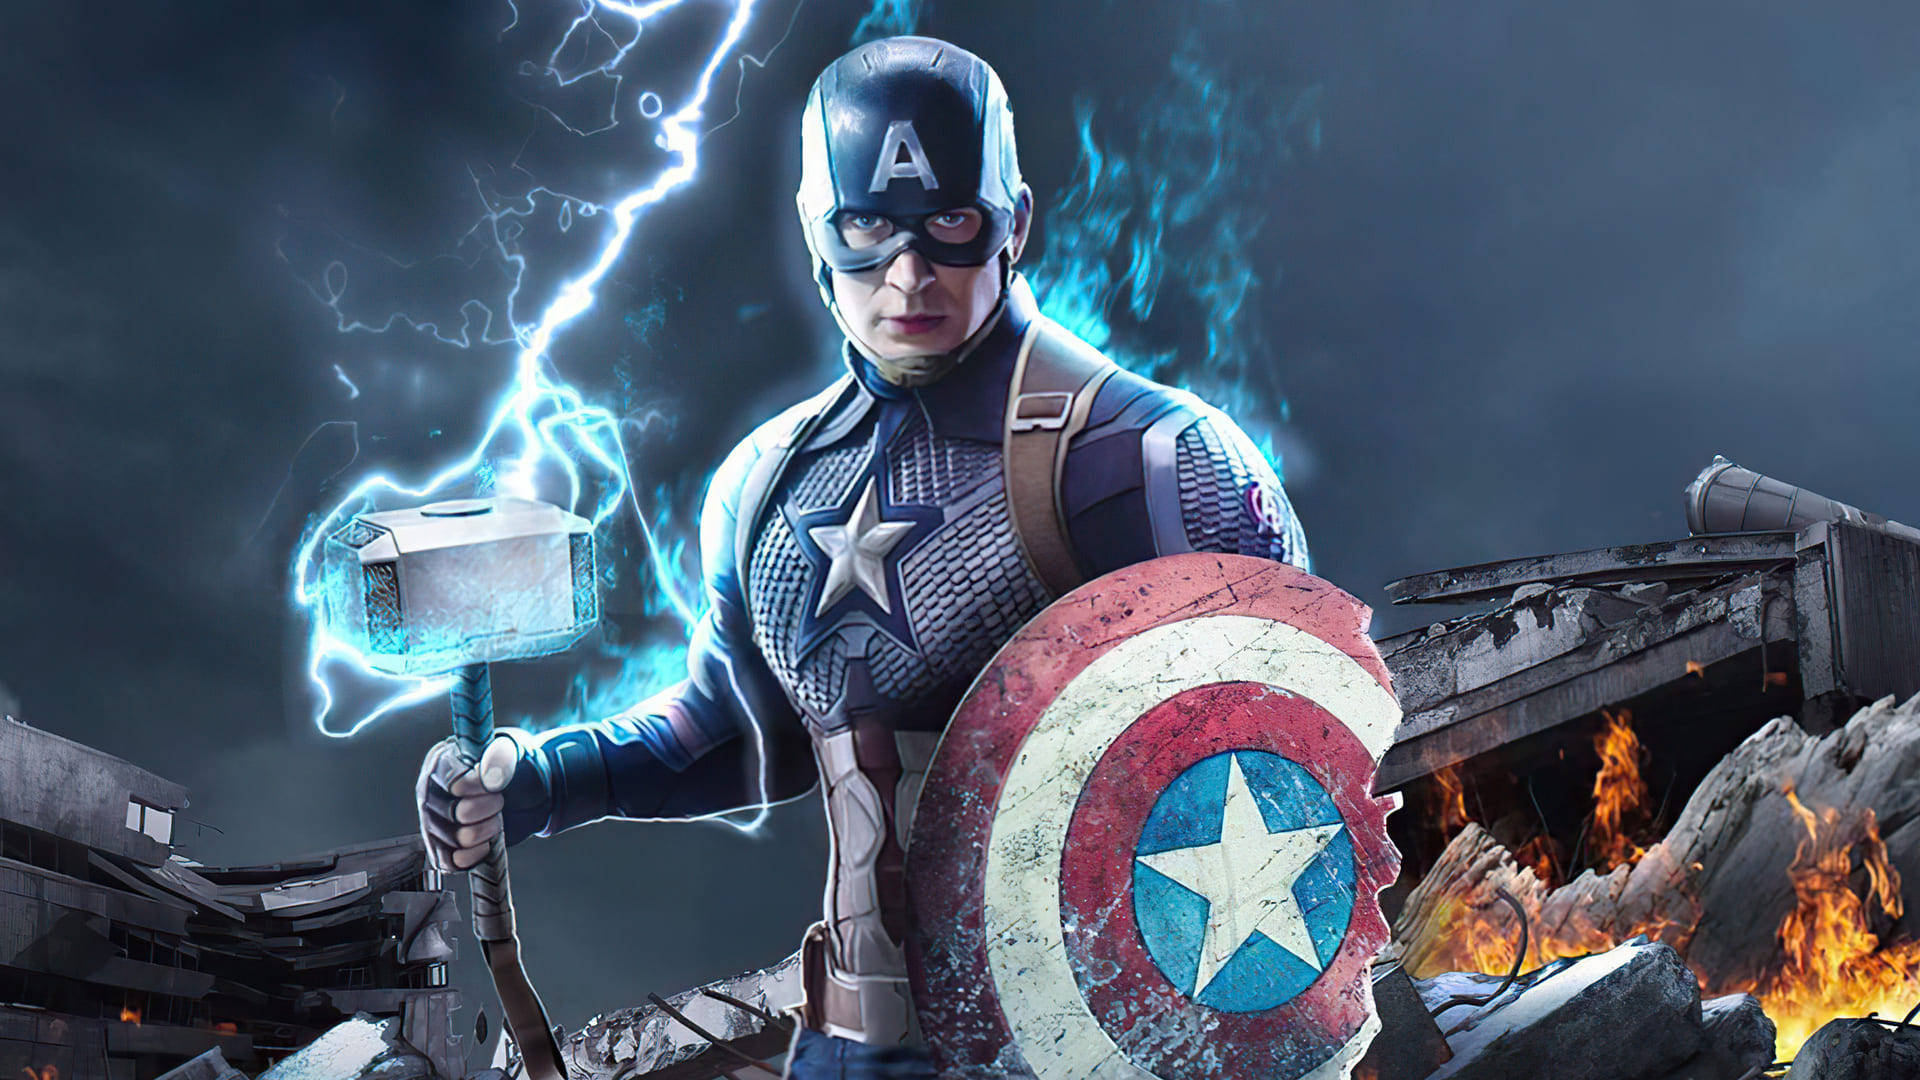 Download Thor Hammer Captain America Laptop Wallpaper 